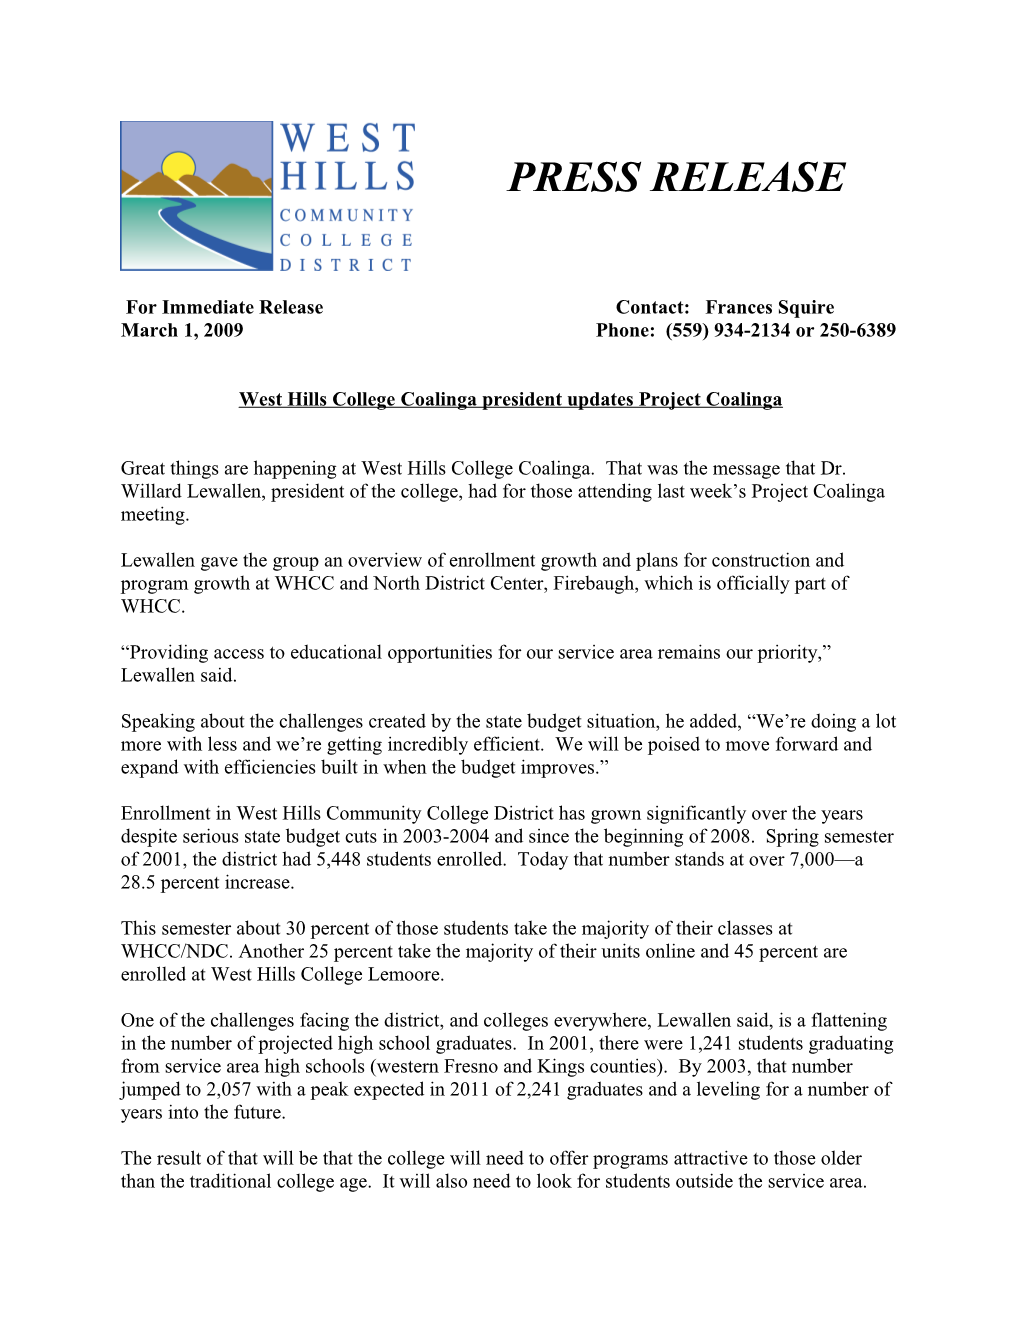 West Hills College Coalinga President Updates Project Coalinga